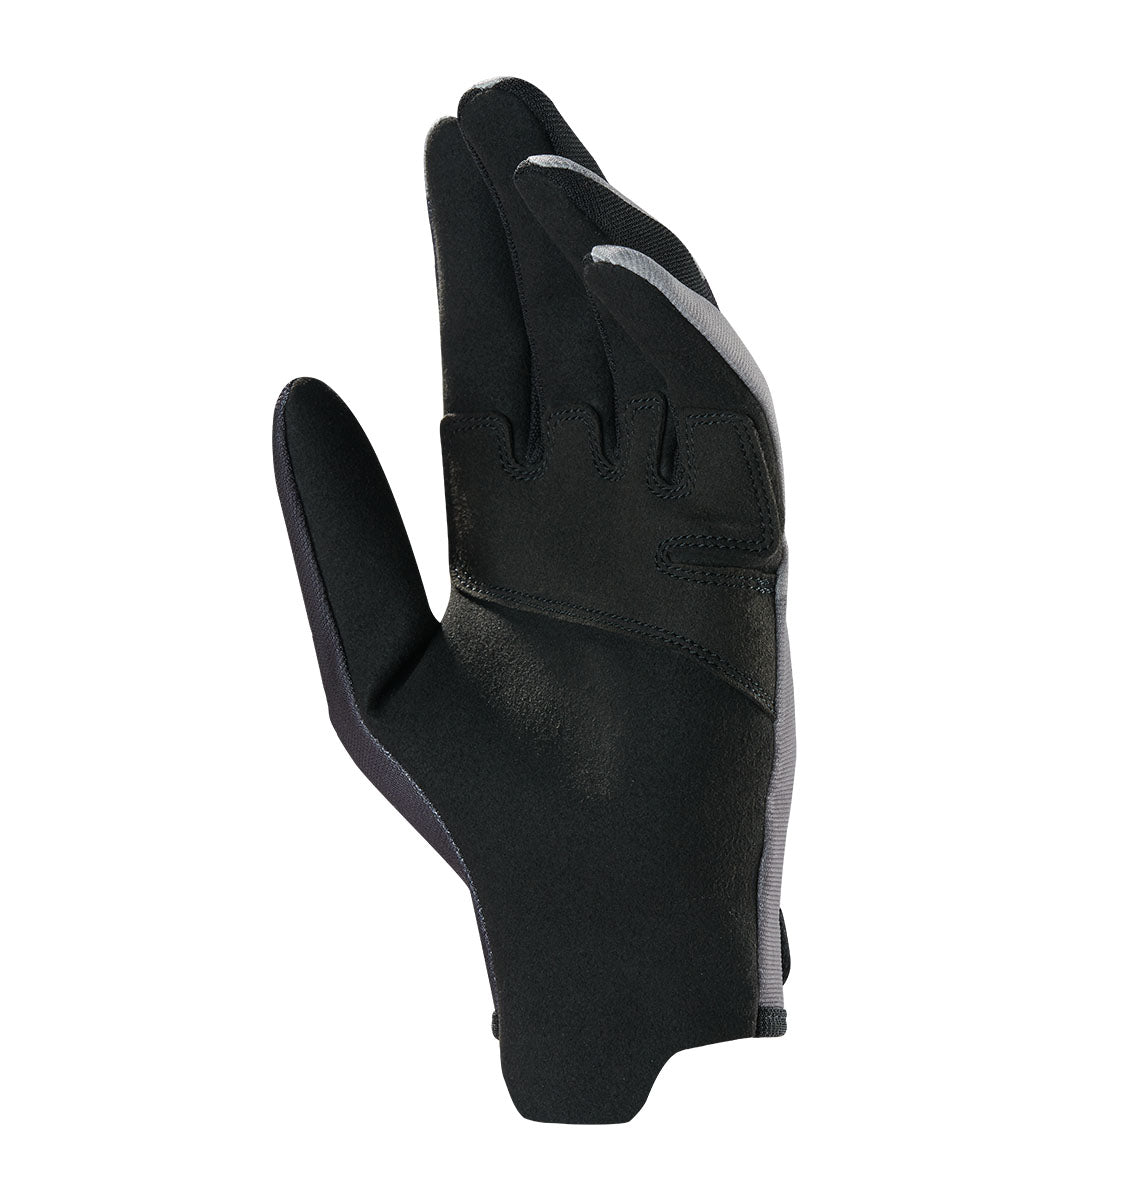 Harbinger Shield Protect Gloves - Men's - Black - 3